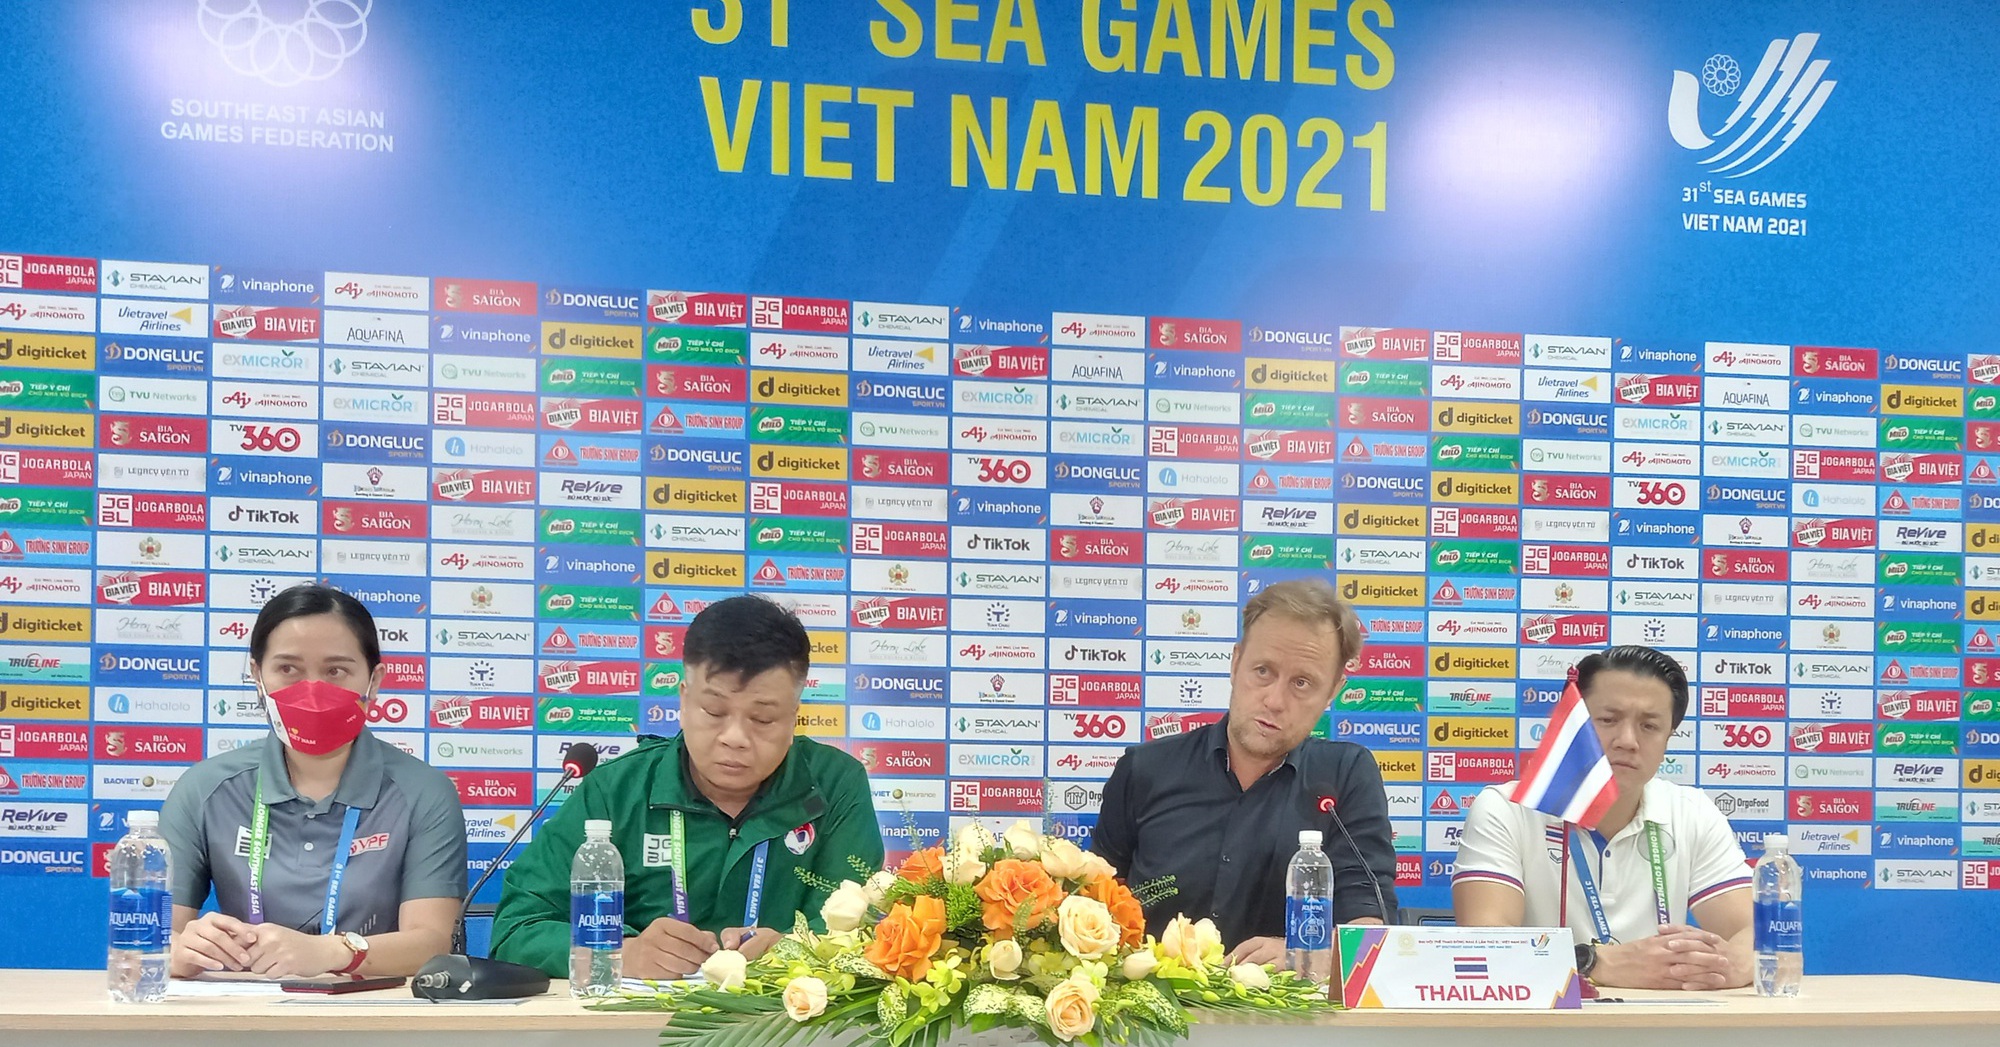 Winning “5 stars” Singapore U23, Thailand U23 coach still admits shortcomings!